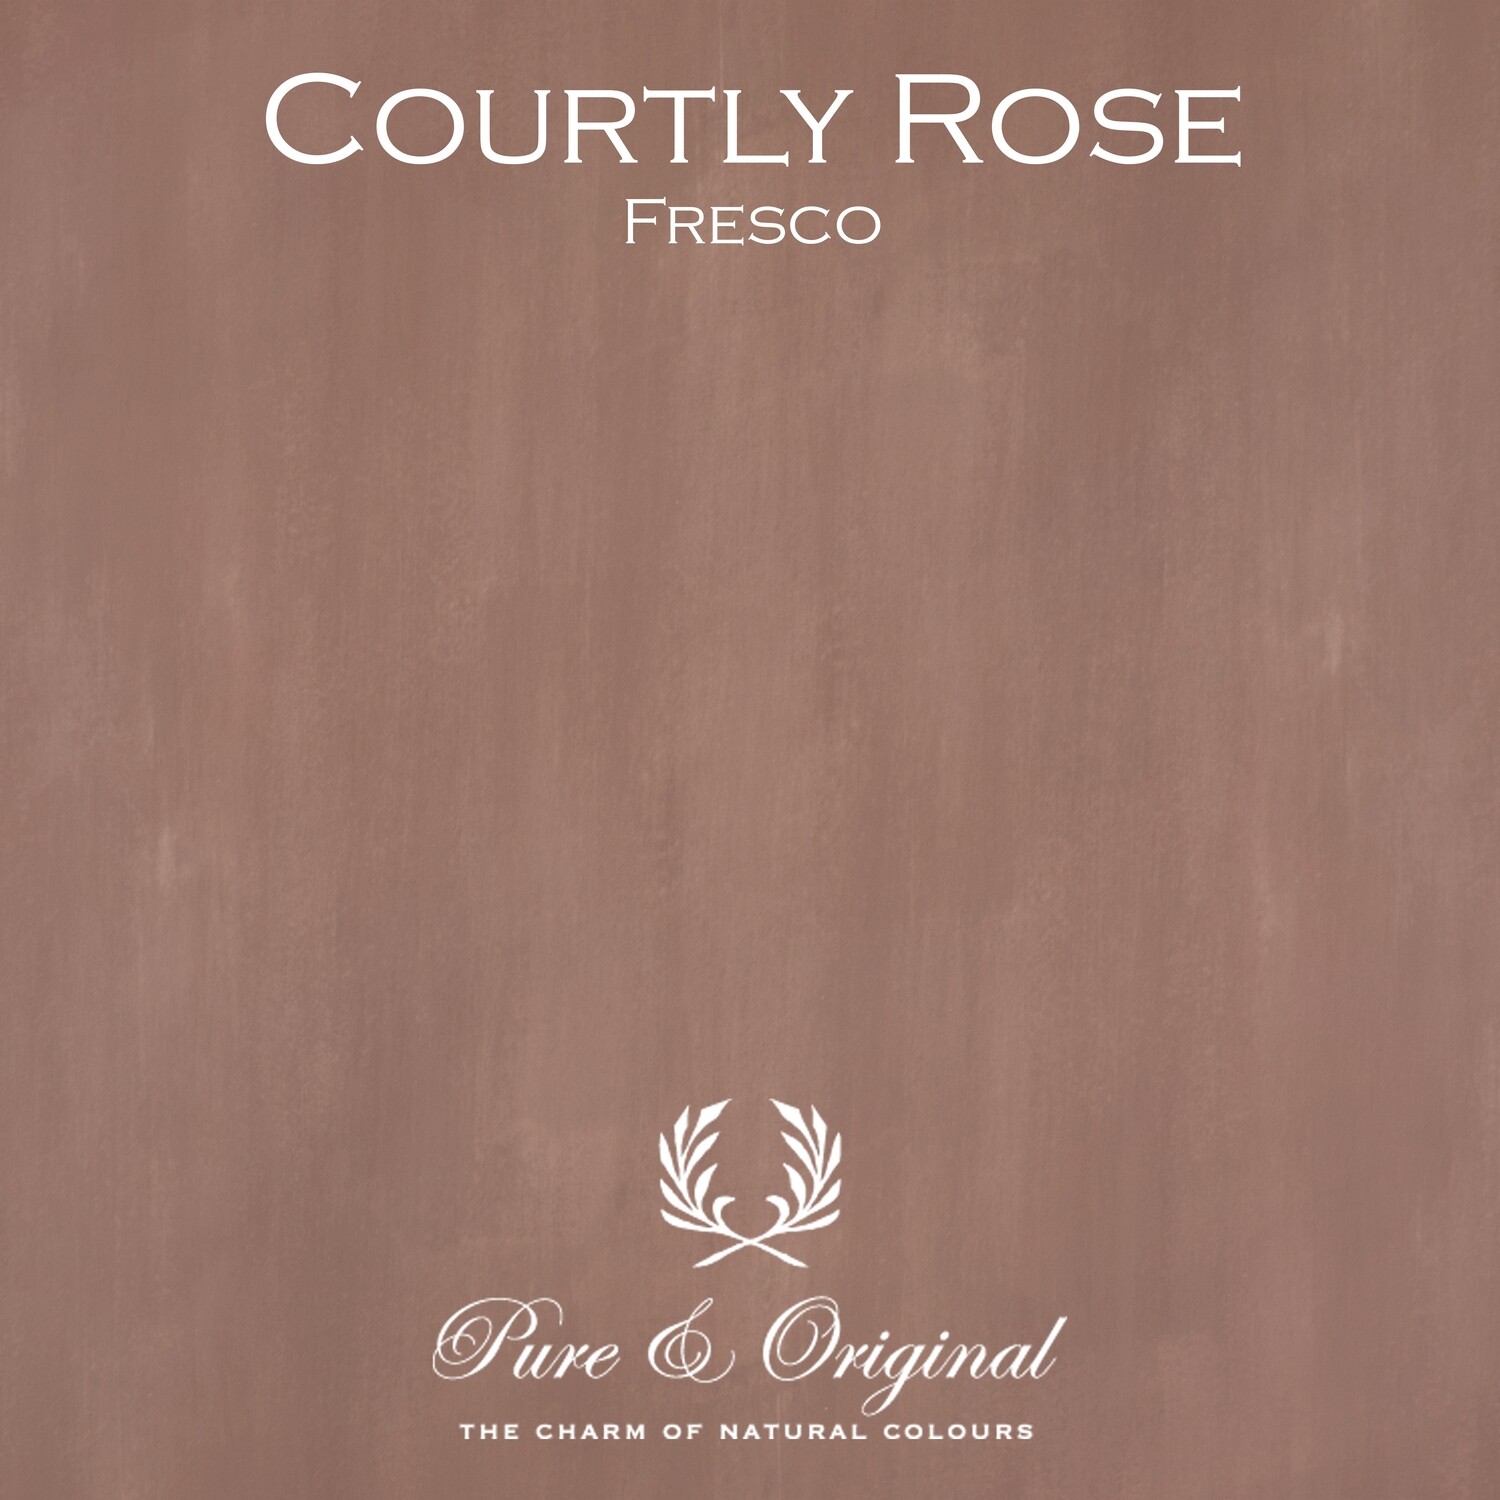 Courtly Rose Fresco